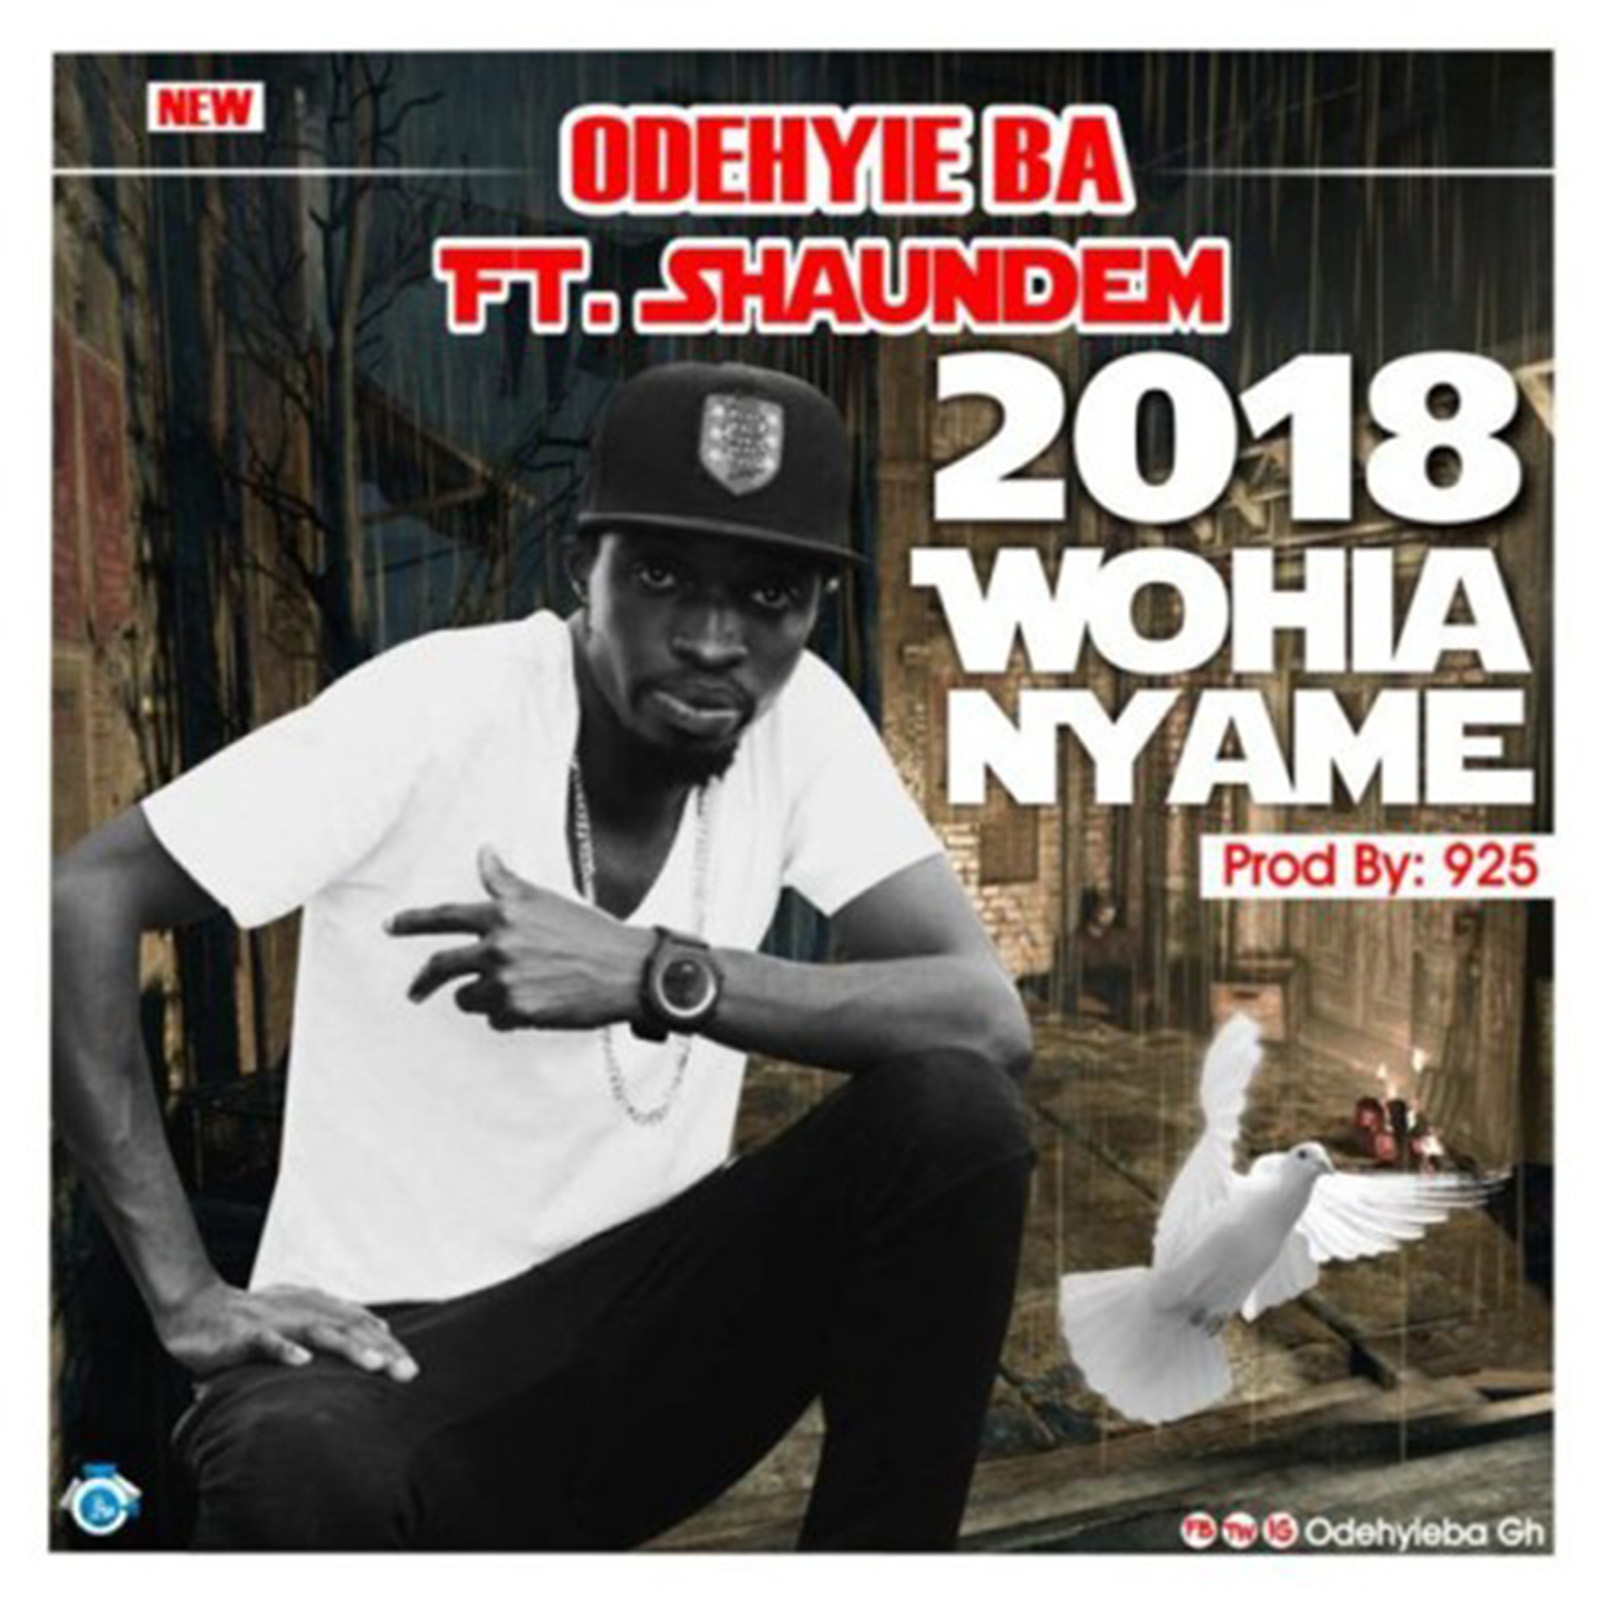 Wohia Nyame by Odehyie Ba feat. Shaundem